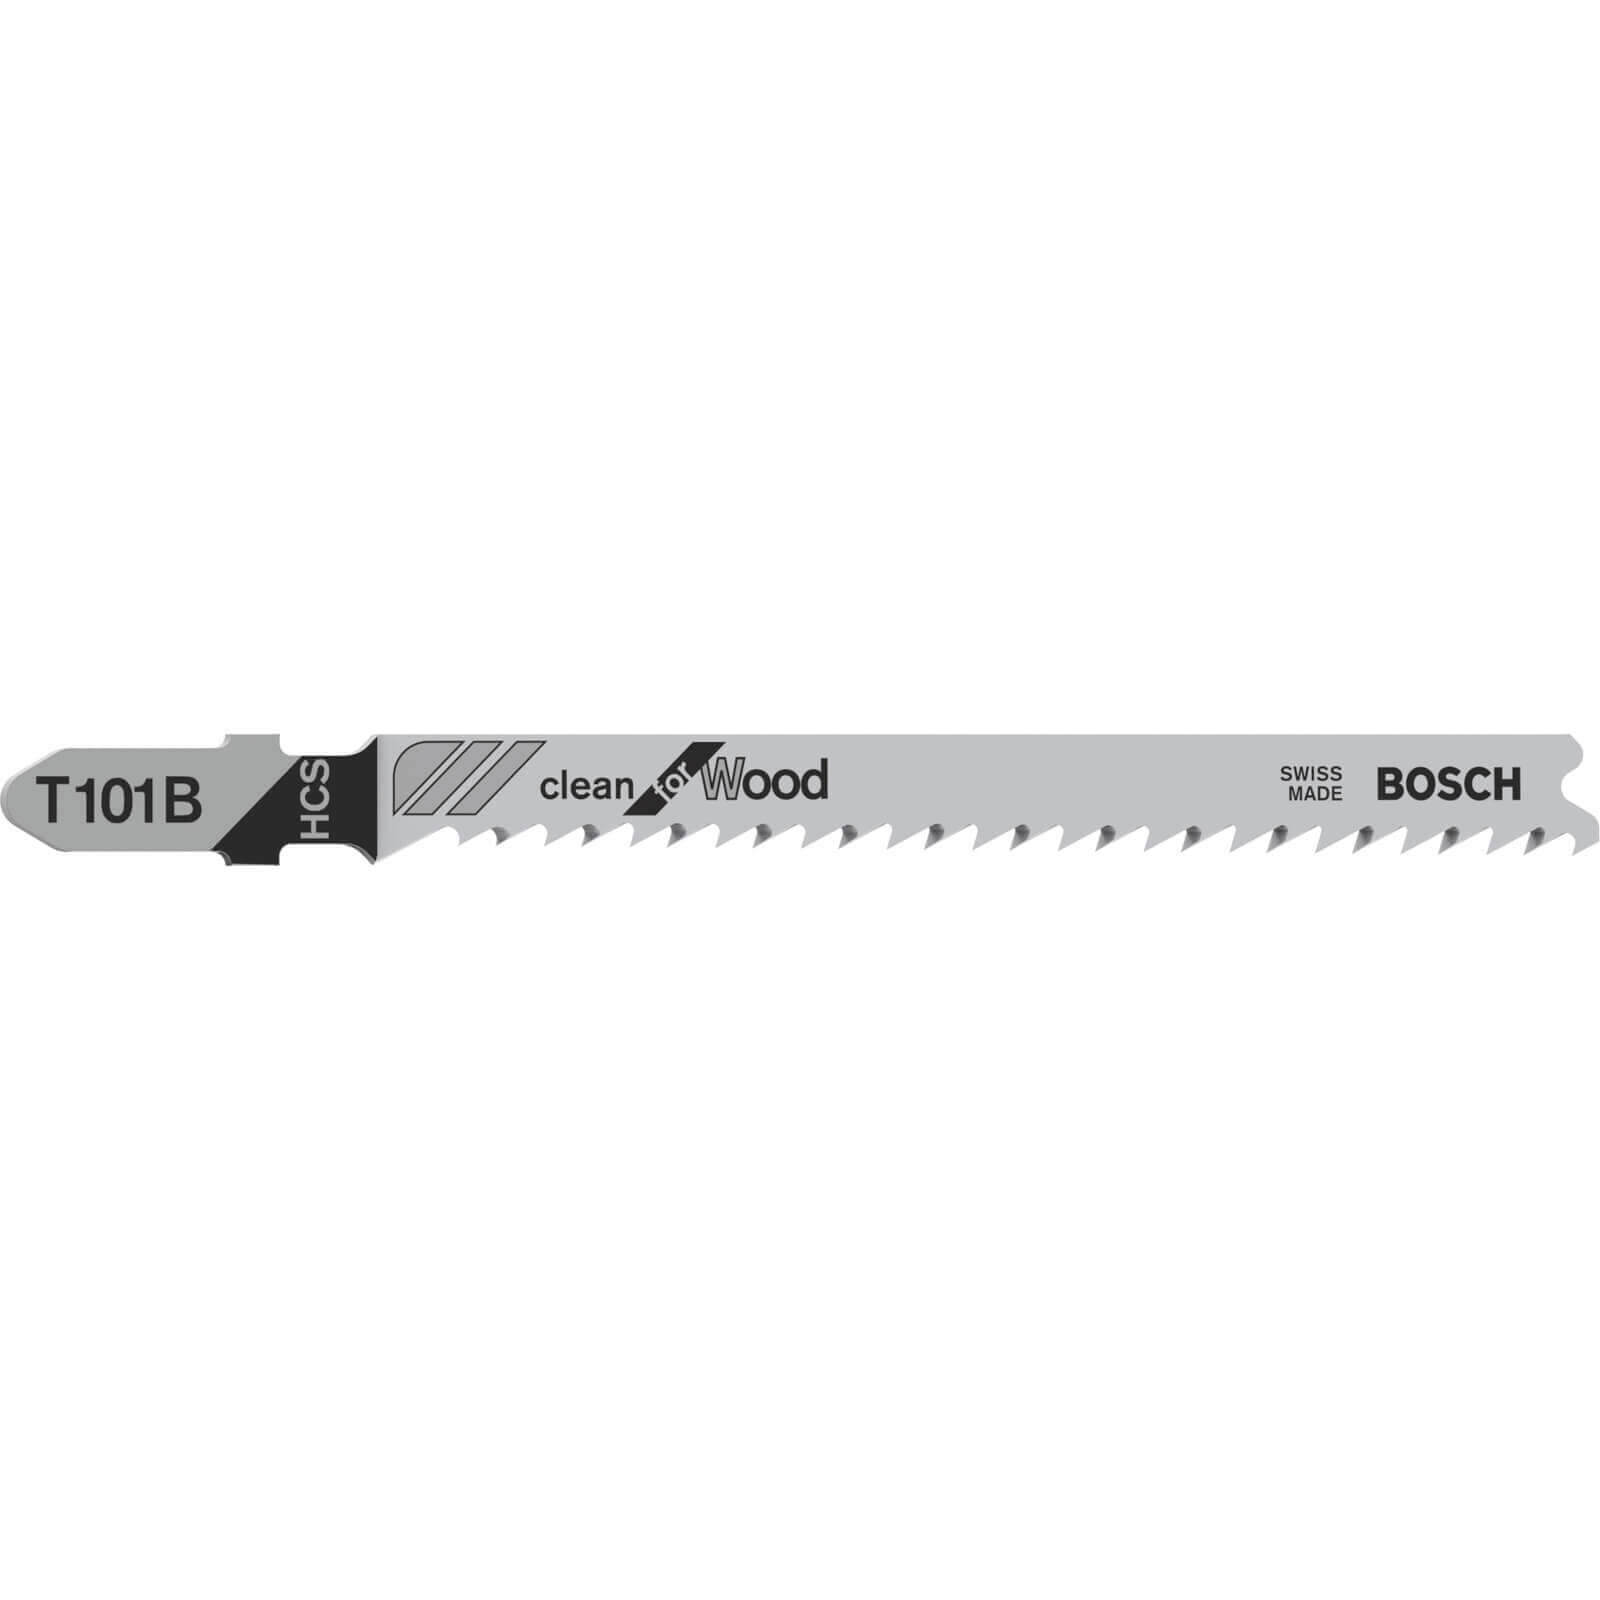 Photo of Bosch T101 B Wood Cutting Jigsaw Blades Pack Of 3